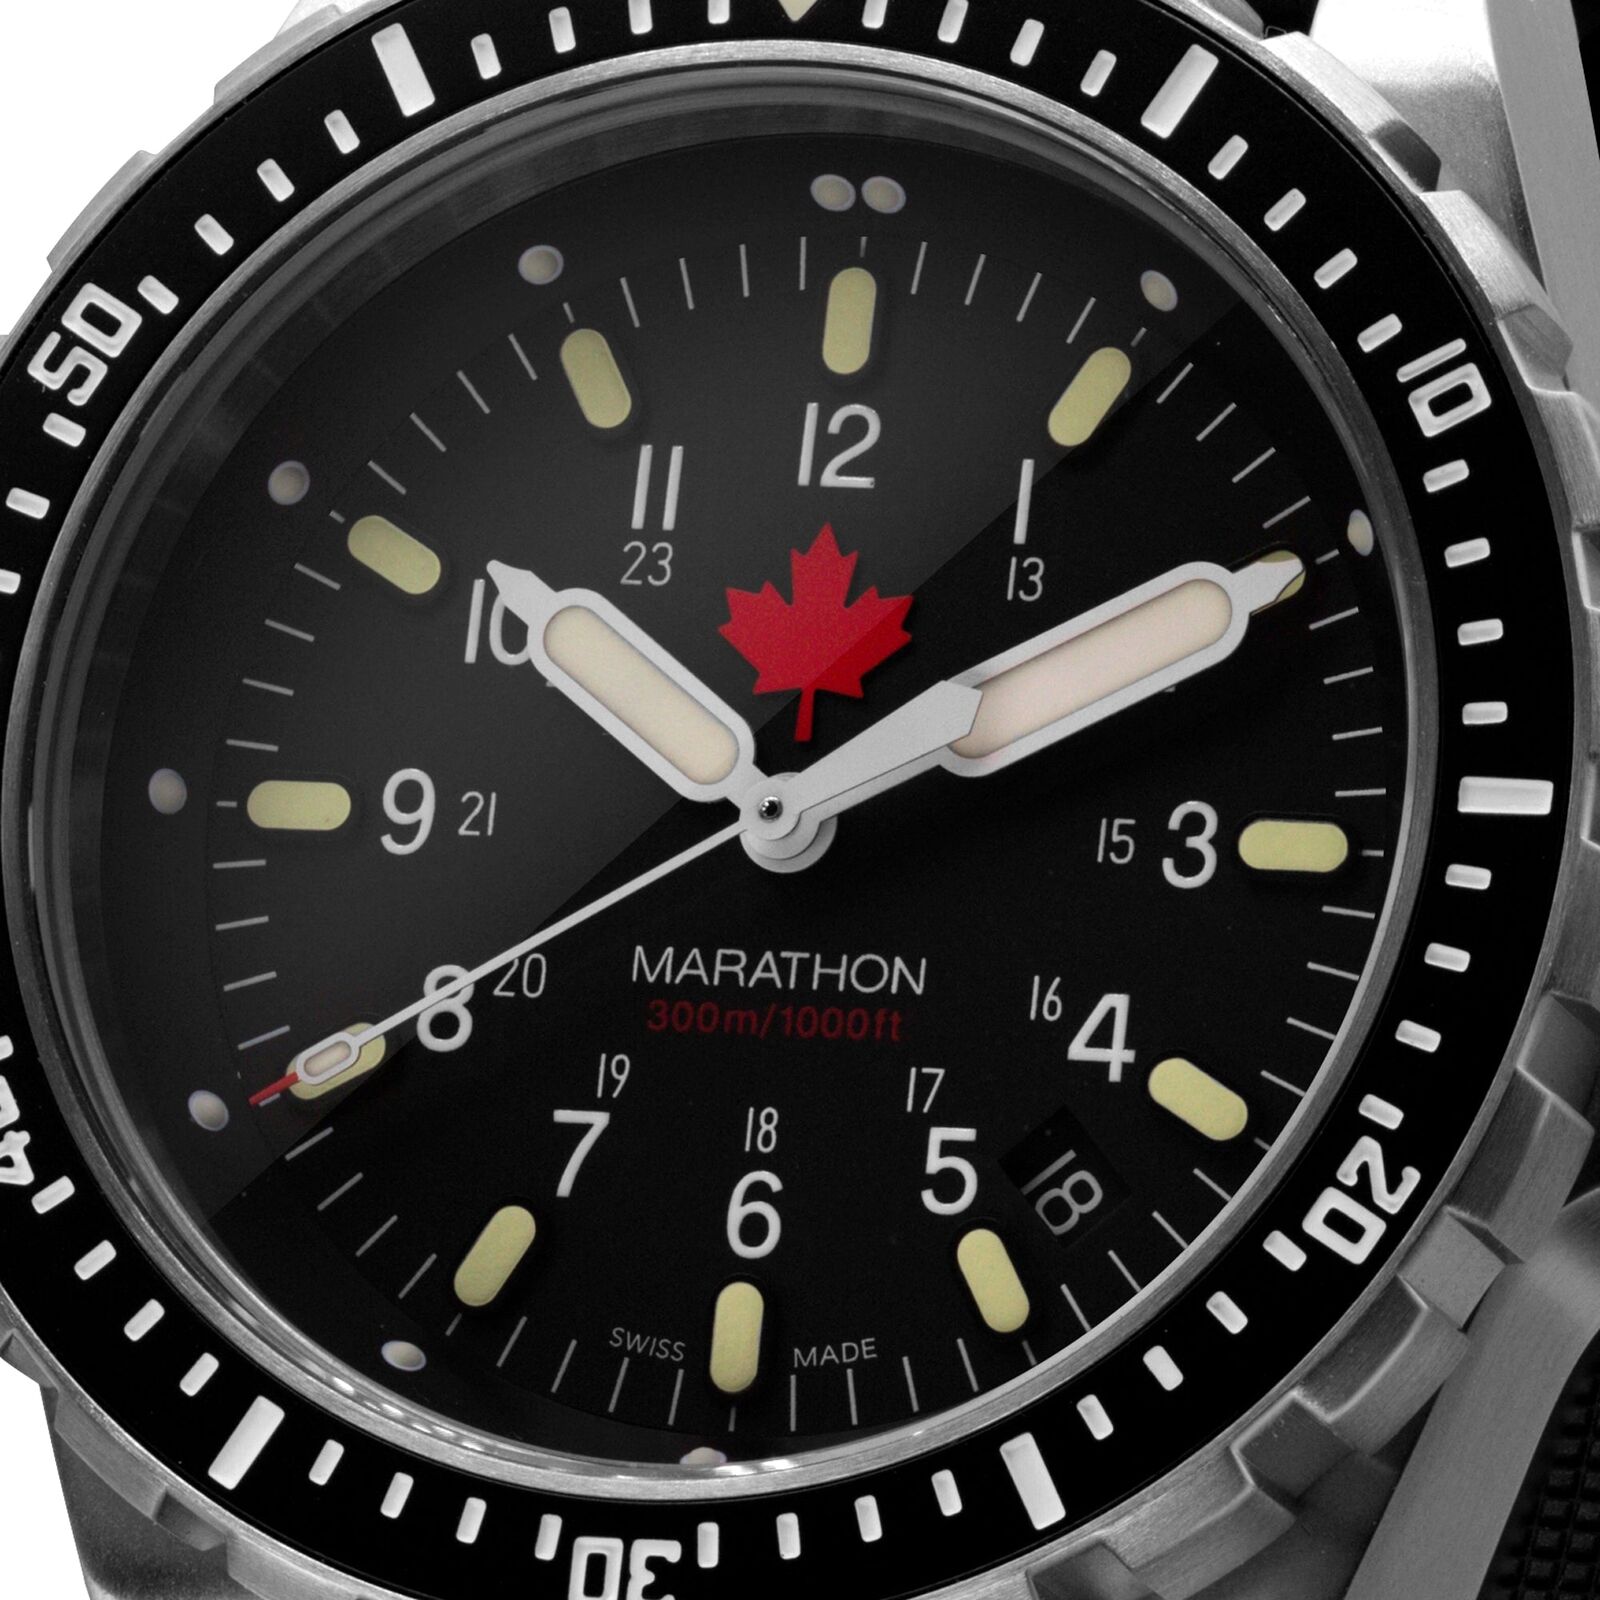 Pre-owned Marathon Jumbo Search Rescue (jsar) Maple  Military Dive Watch: W/ Warranty